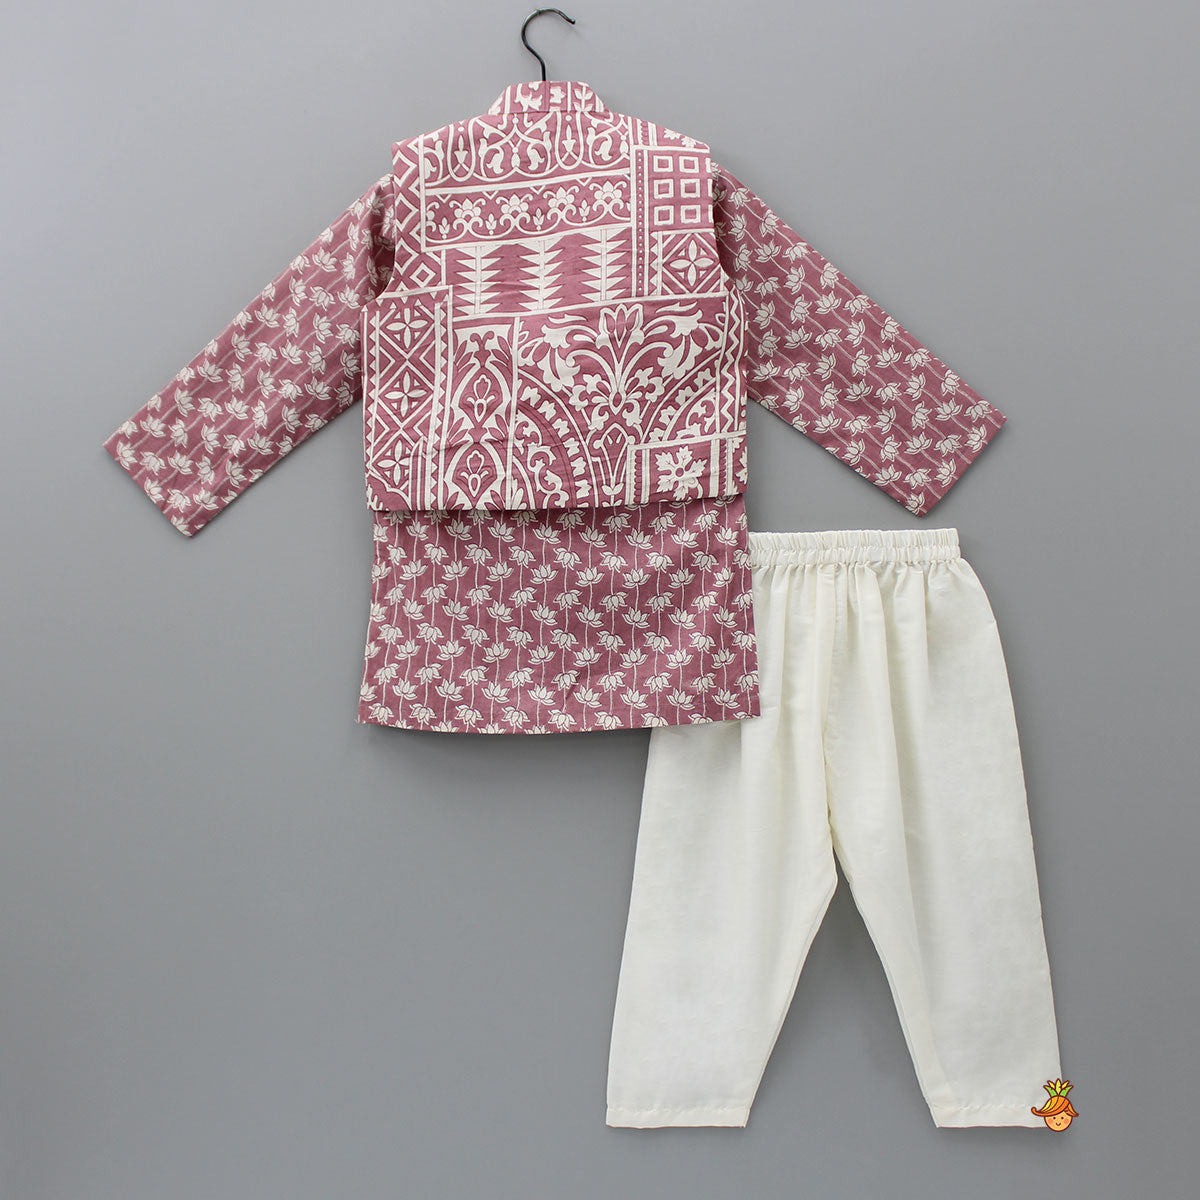 Printed Kurta With Matching Jacket And Pyjama